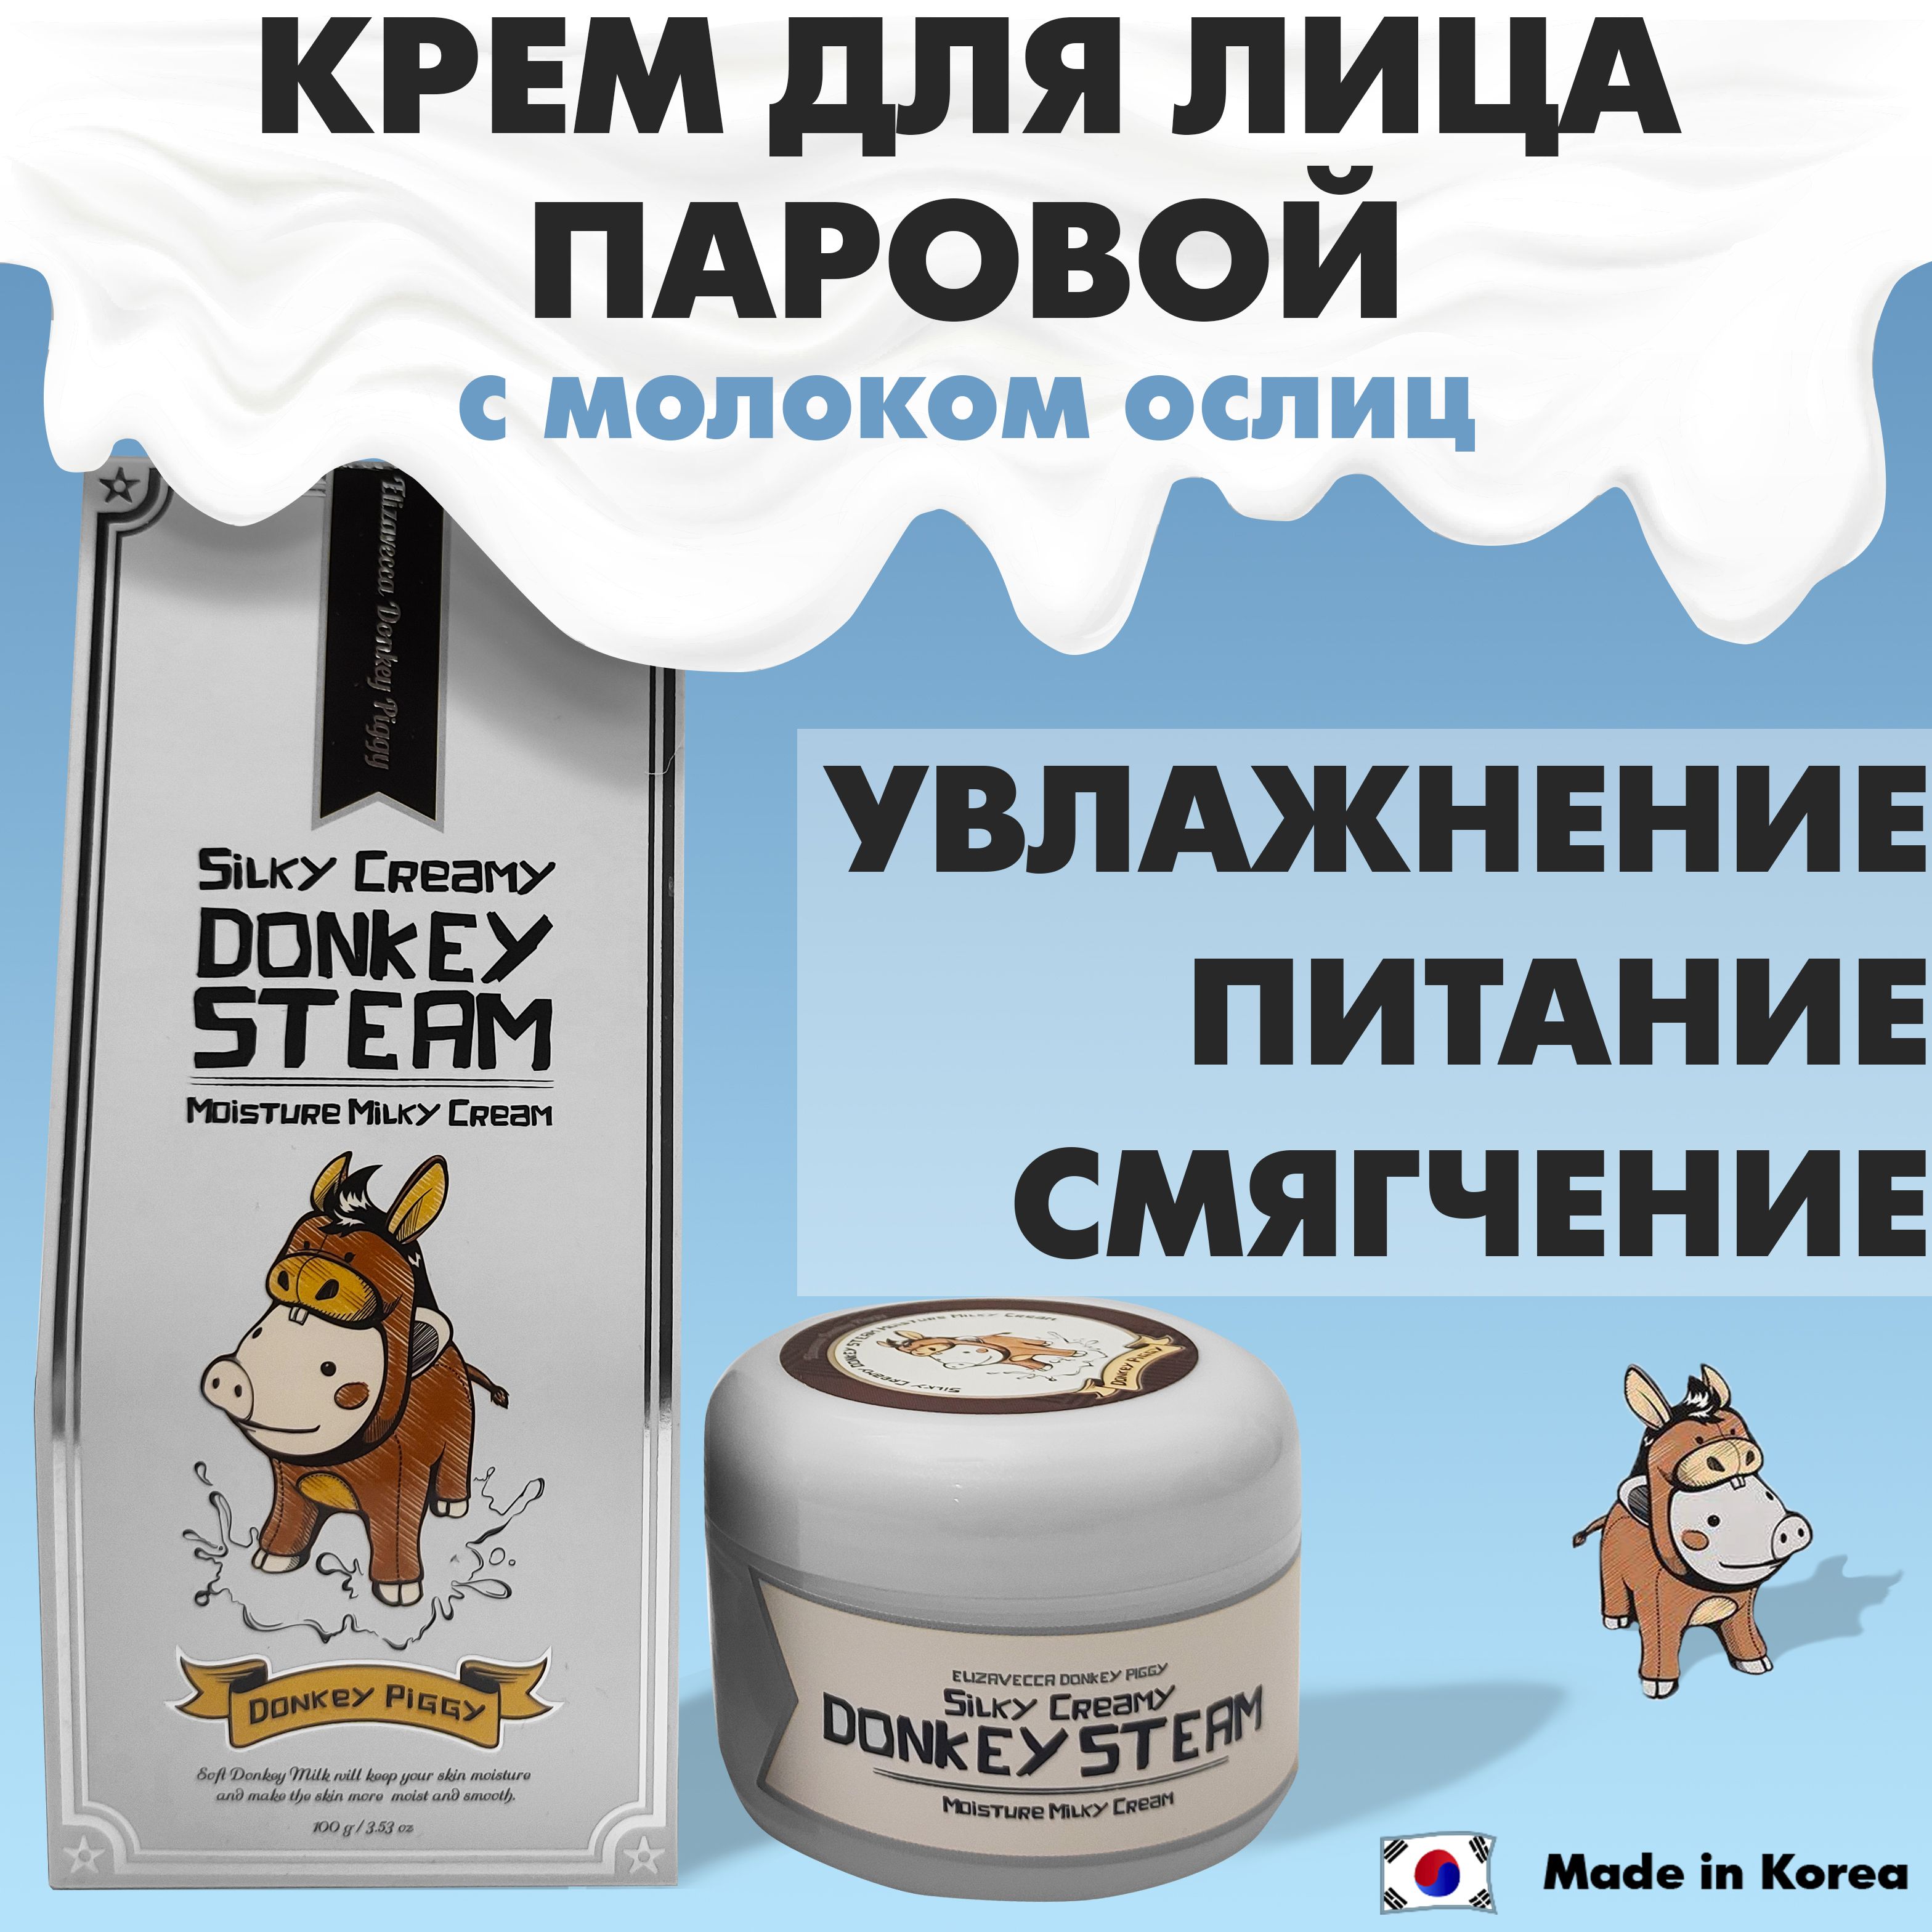 Silky creamy donkey steam cream mask pack фото 44